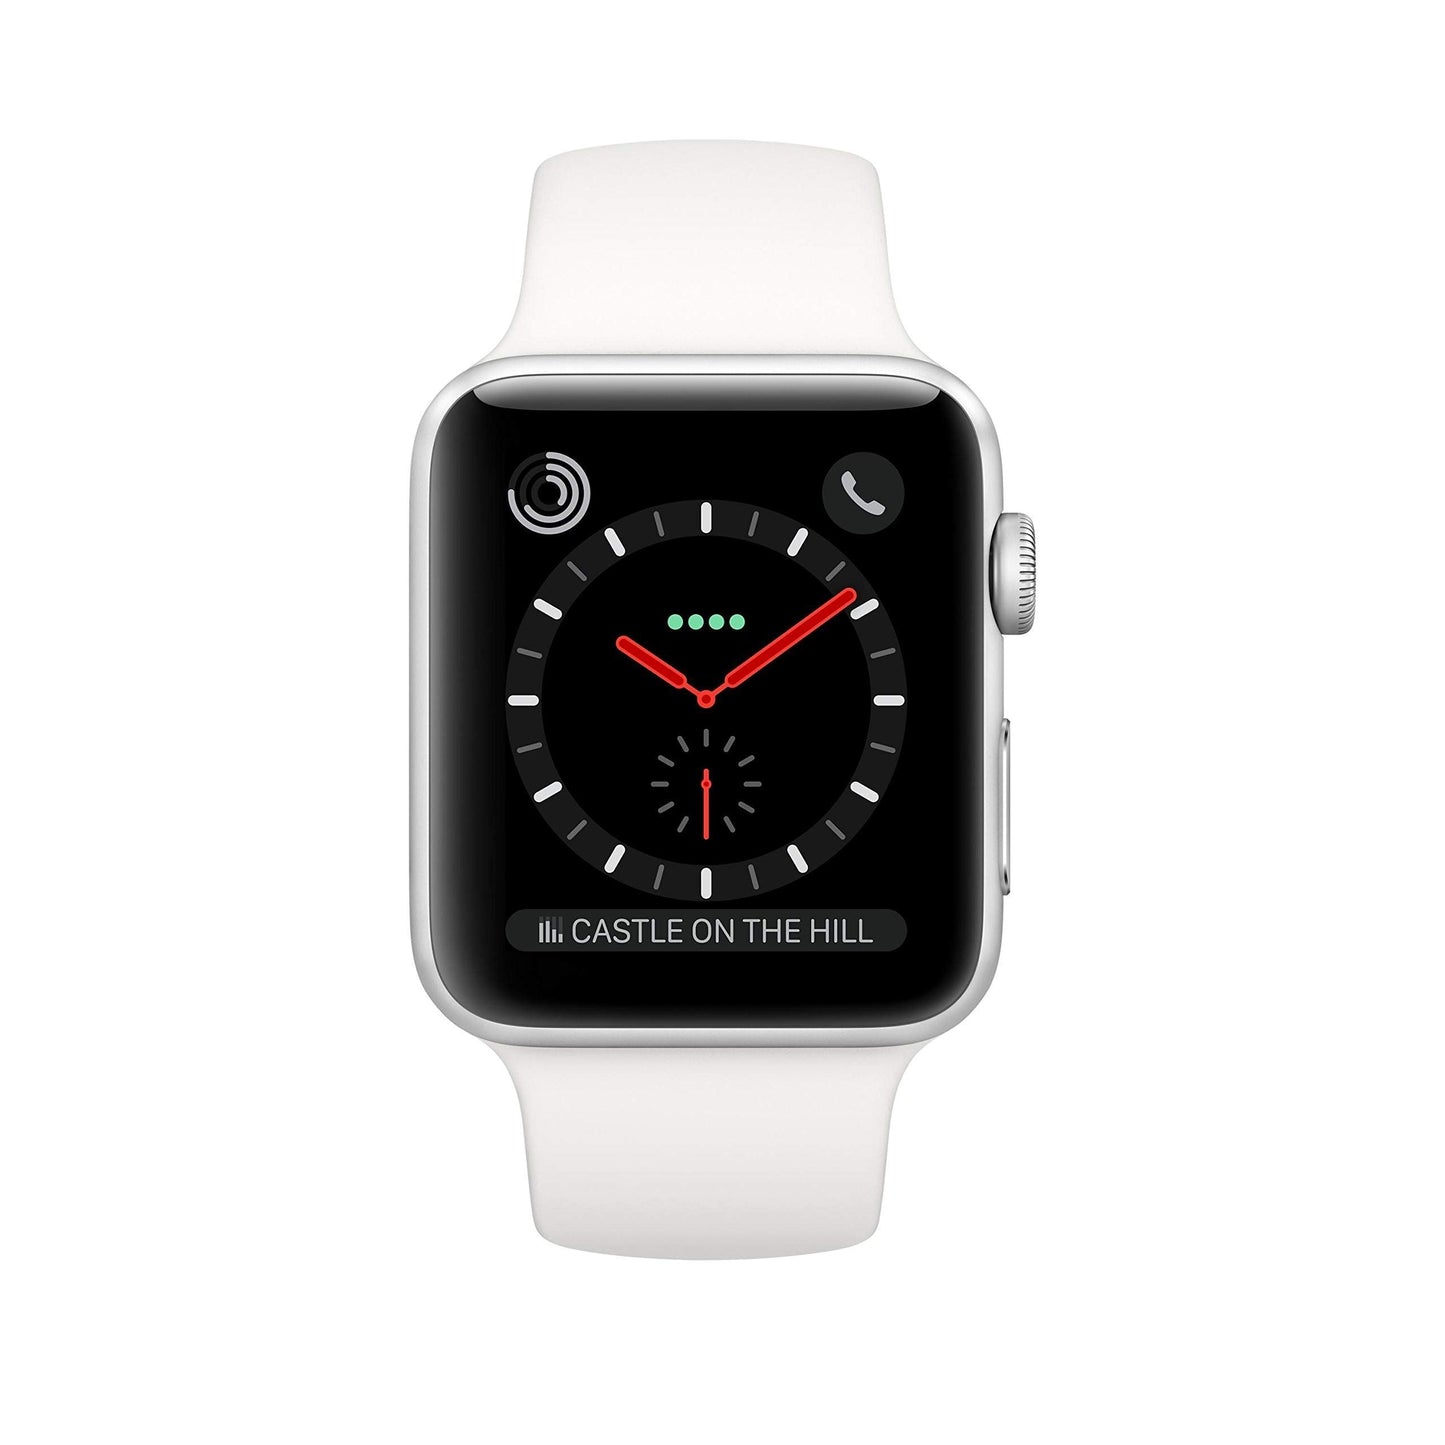 Refurbished Apple Watch Series 3 GPS + LTE